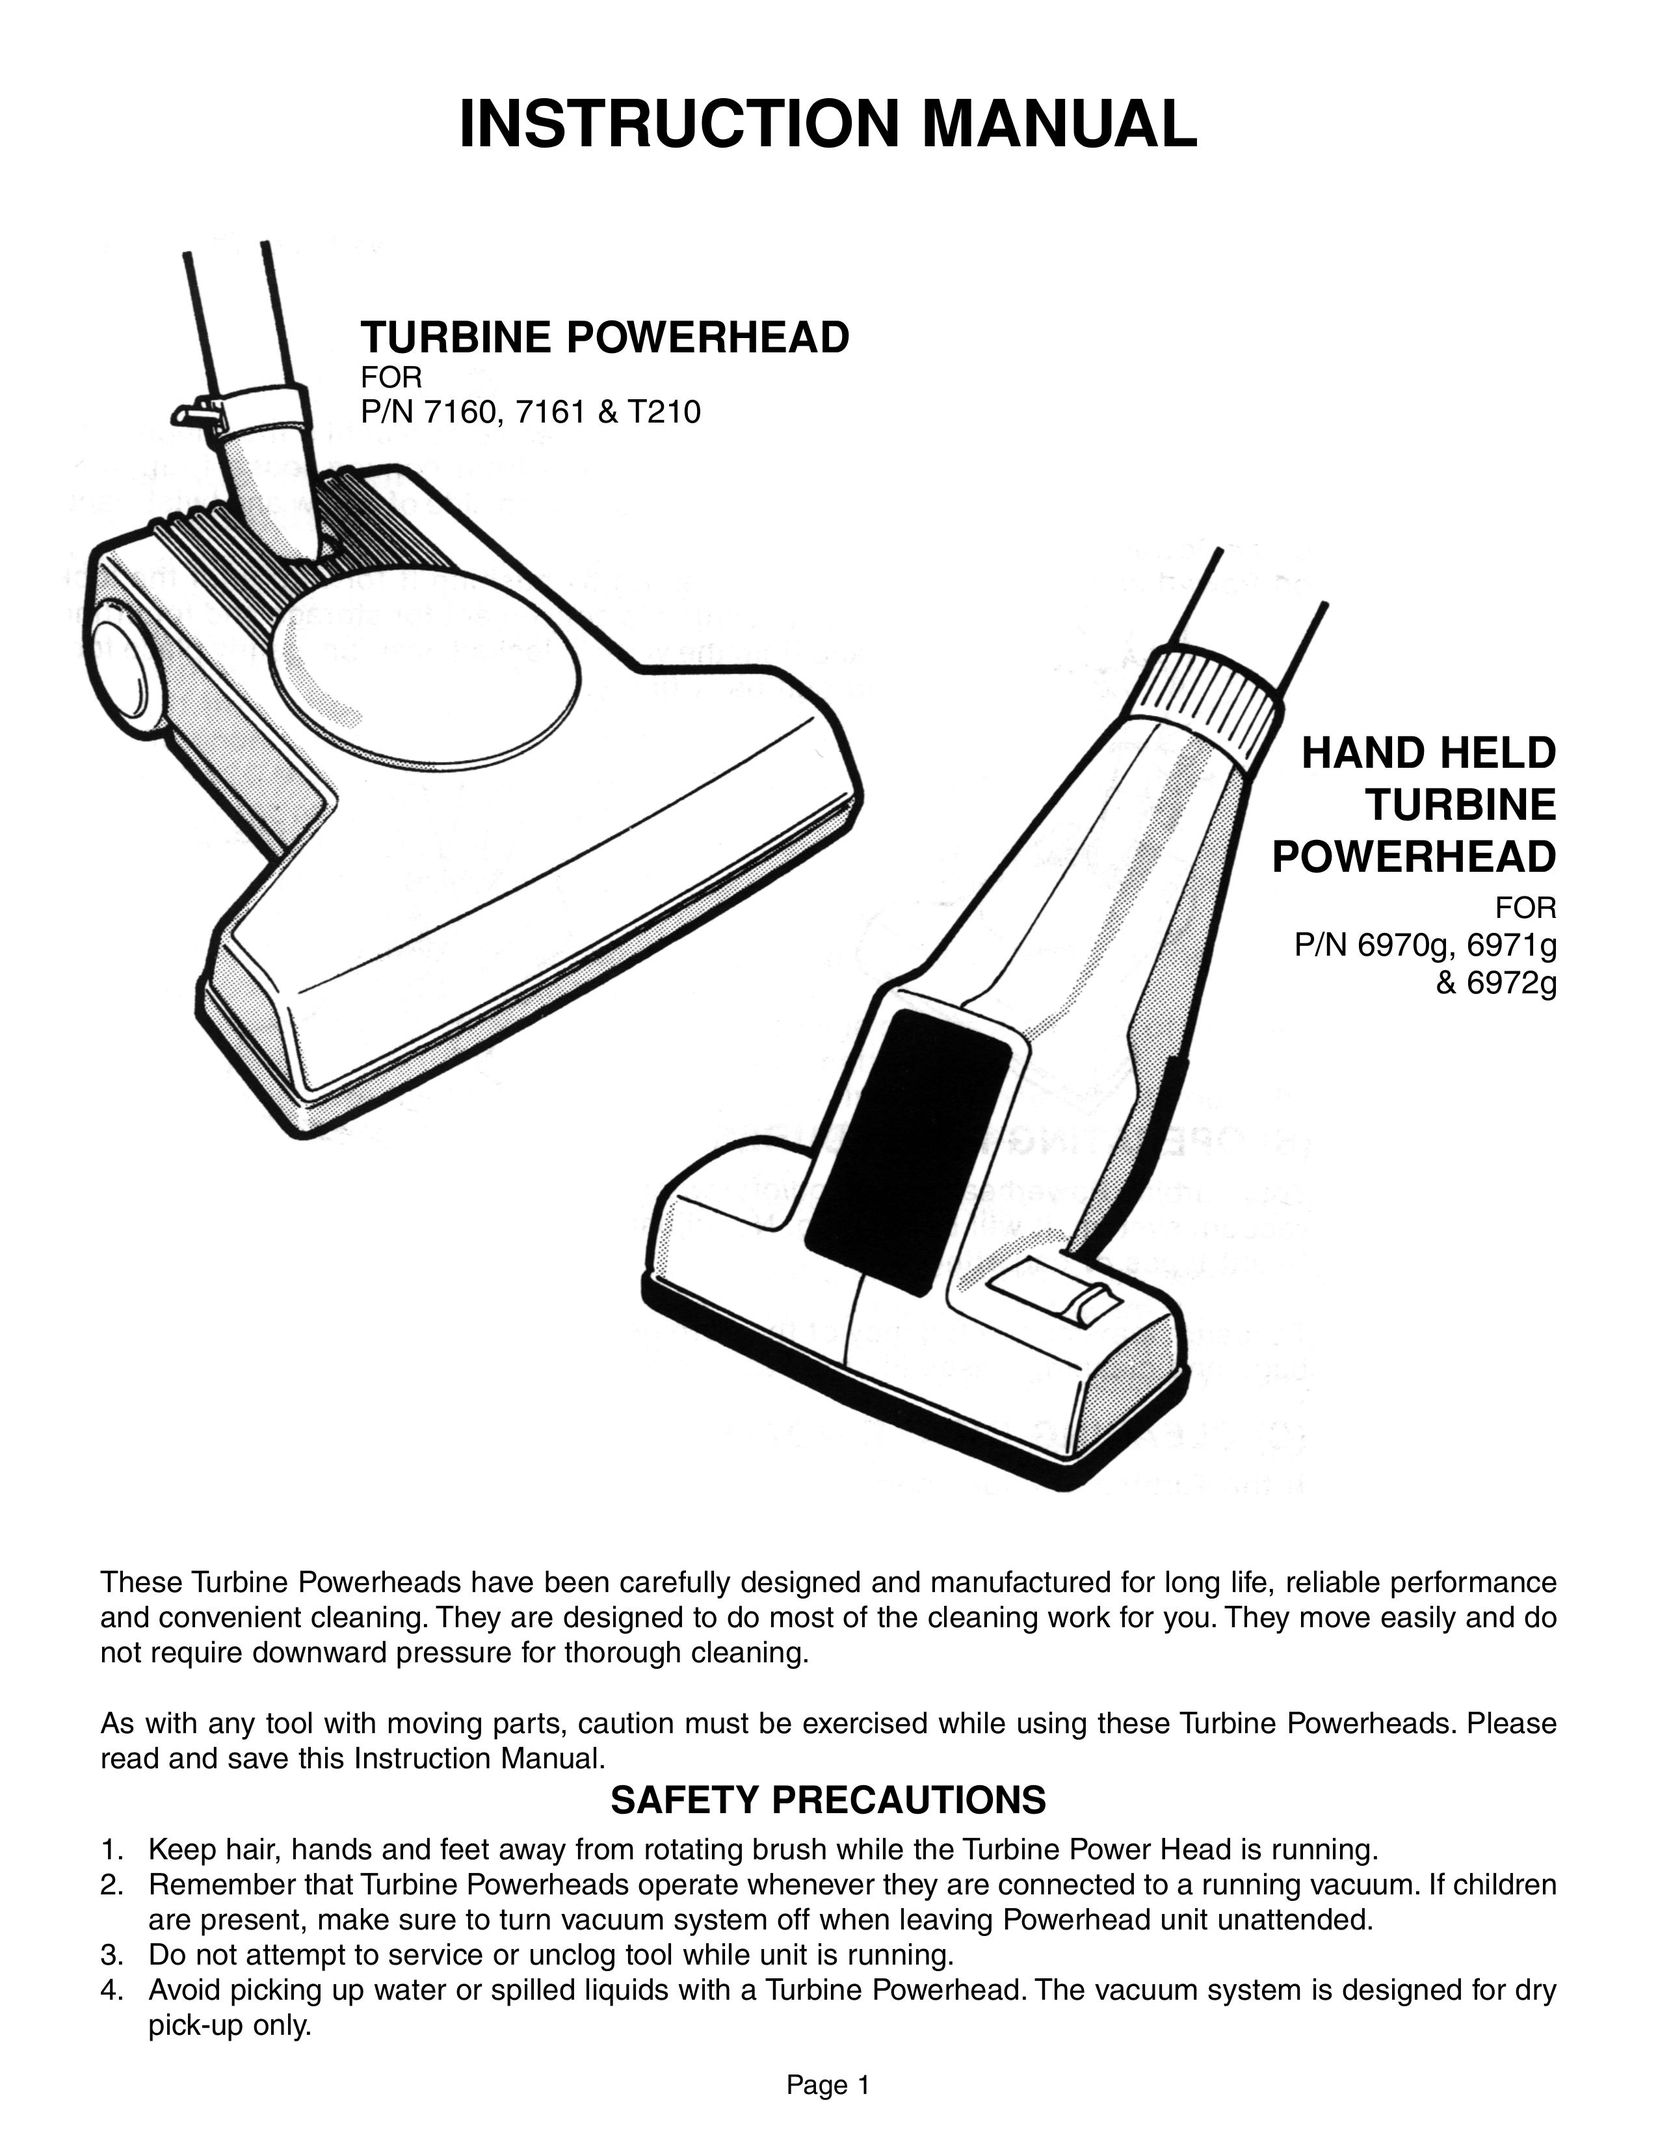 H-P Products TURBINE POWERHEAD and HAND HELD TURBINE POWERHEAD Vacuum Cleaner User Manual